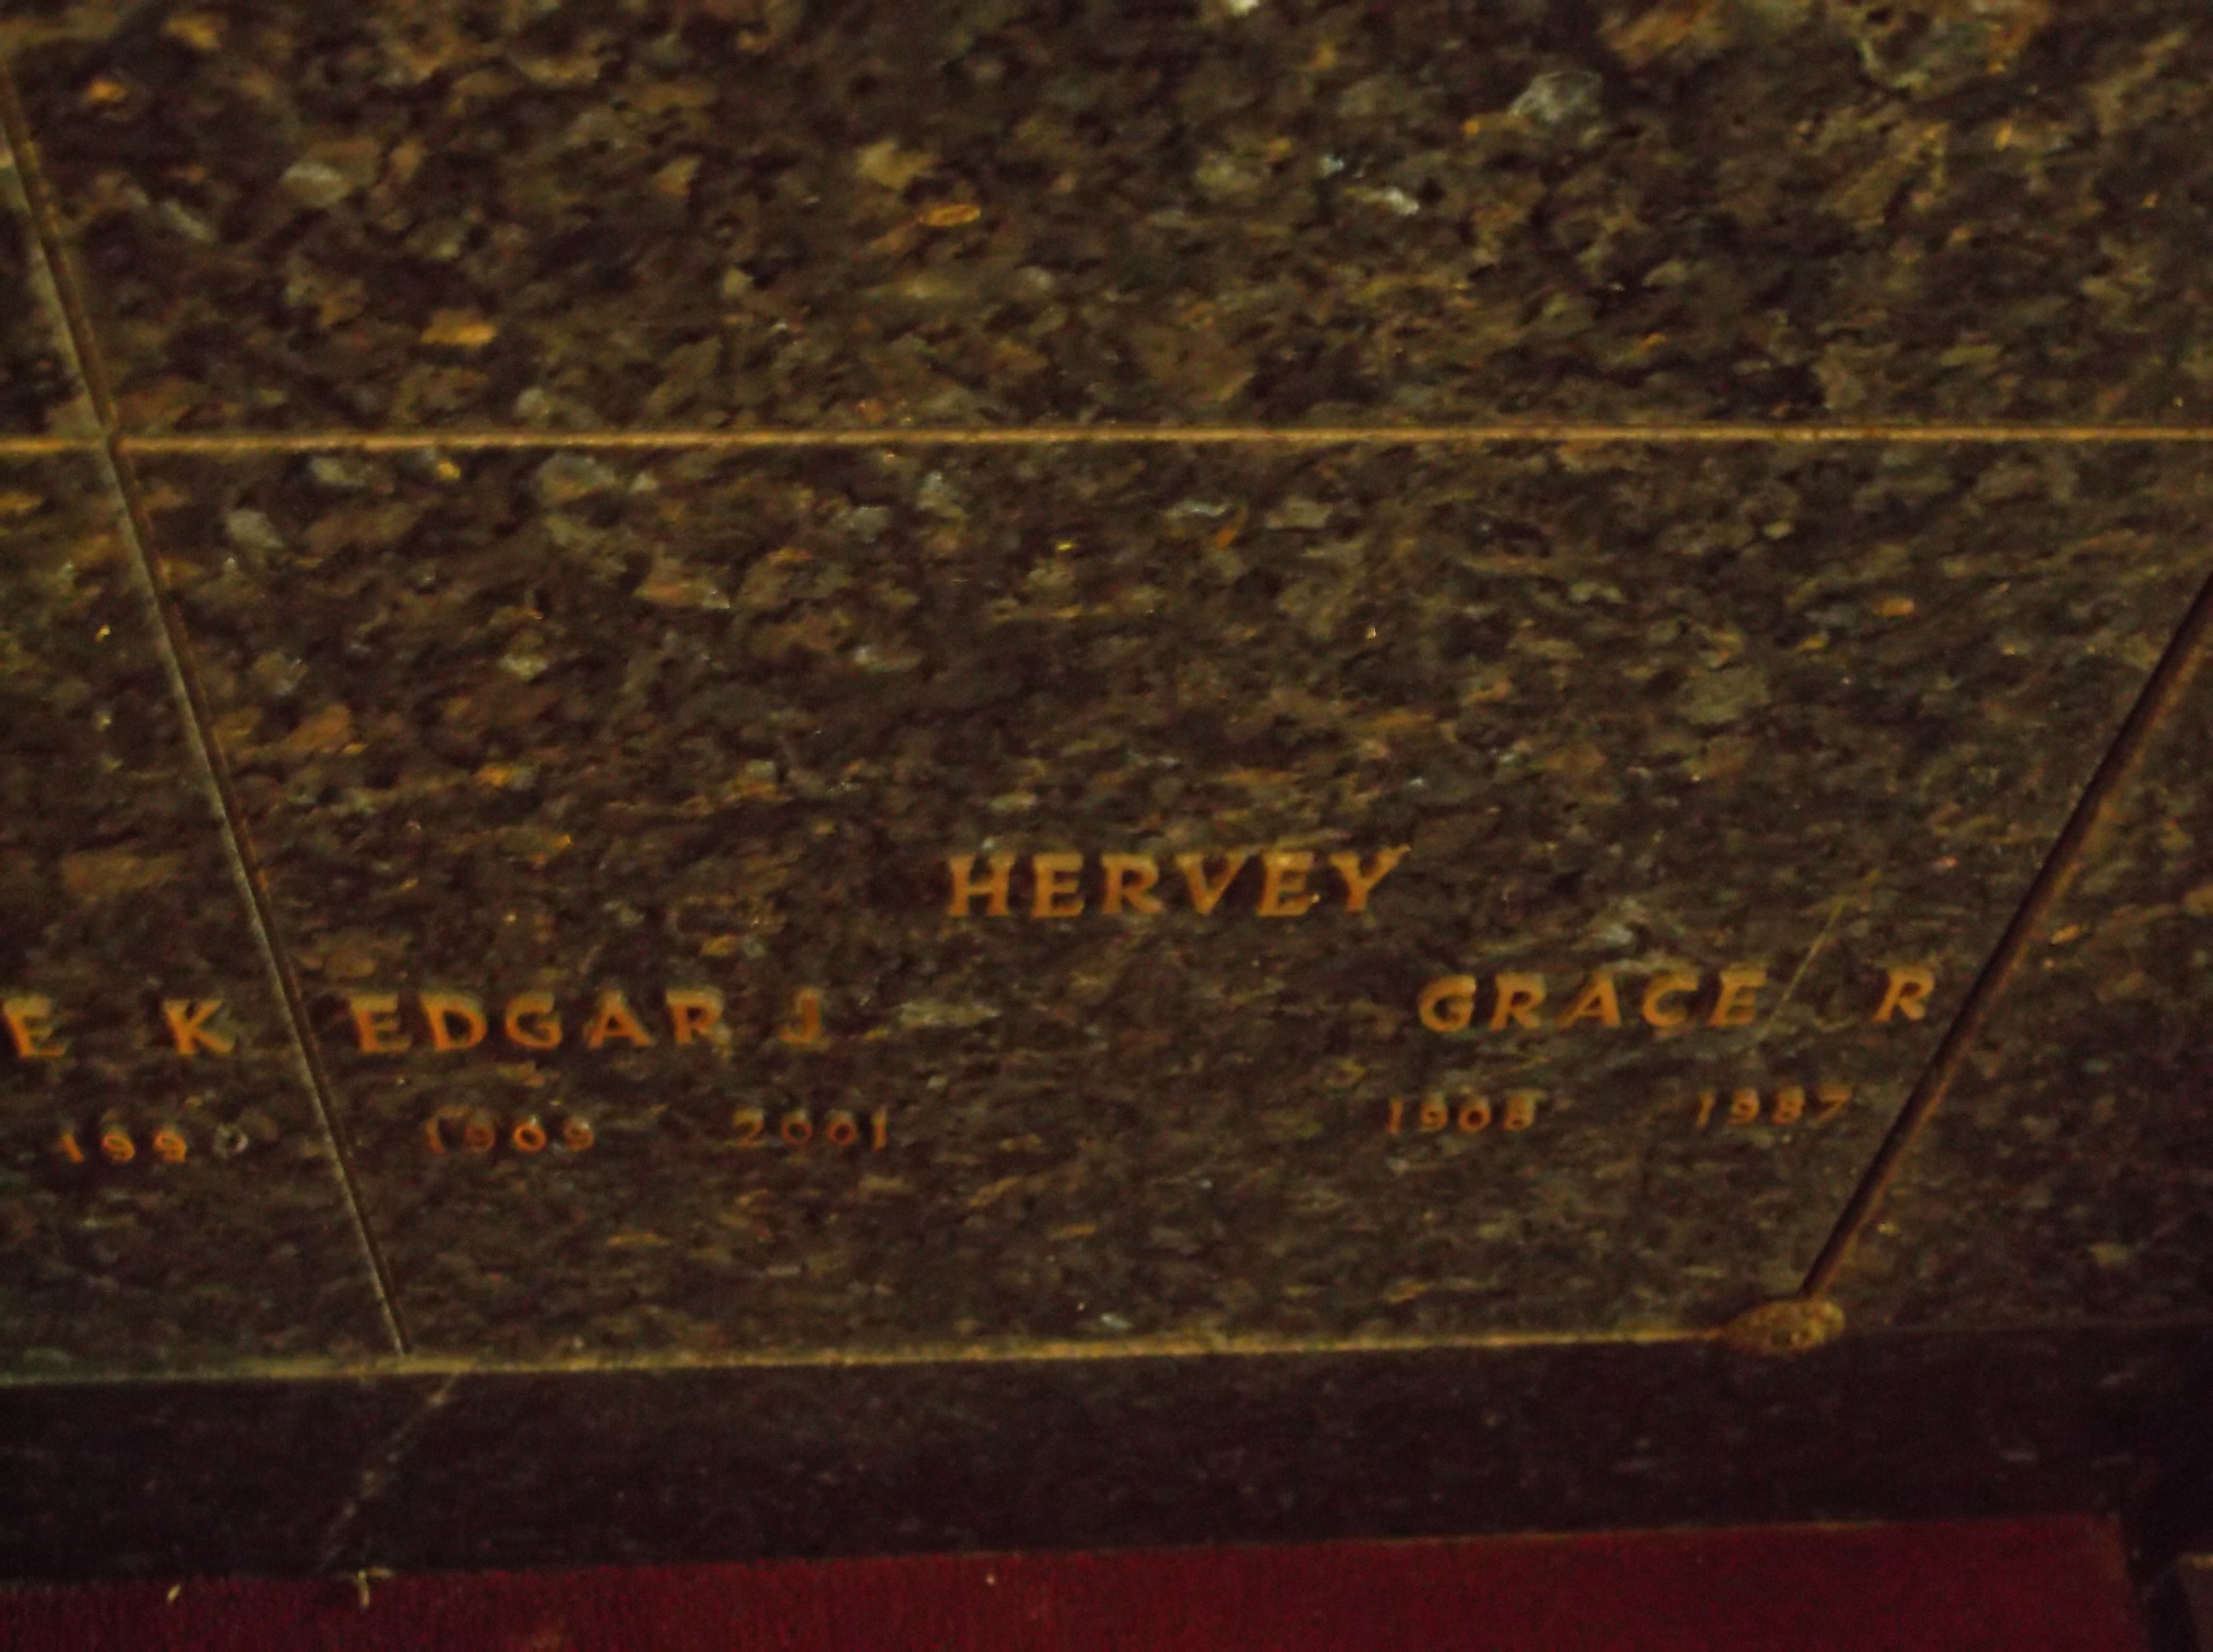 Edgar J Hervey